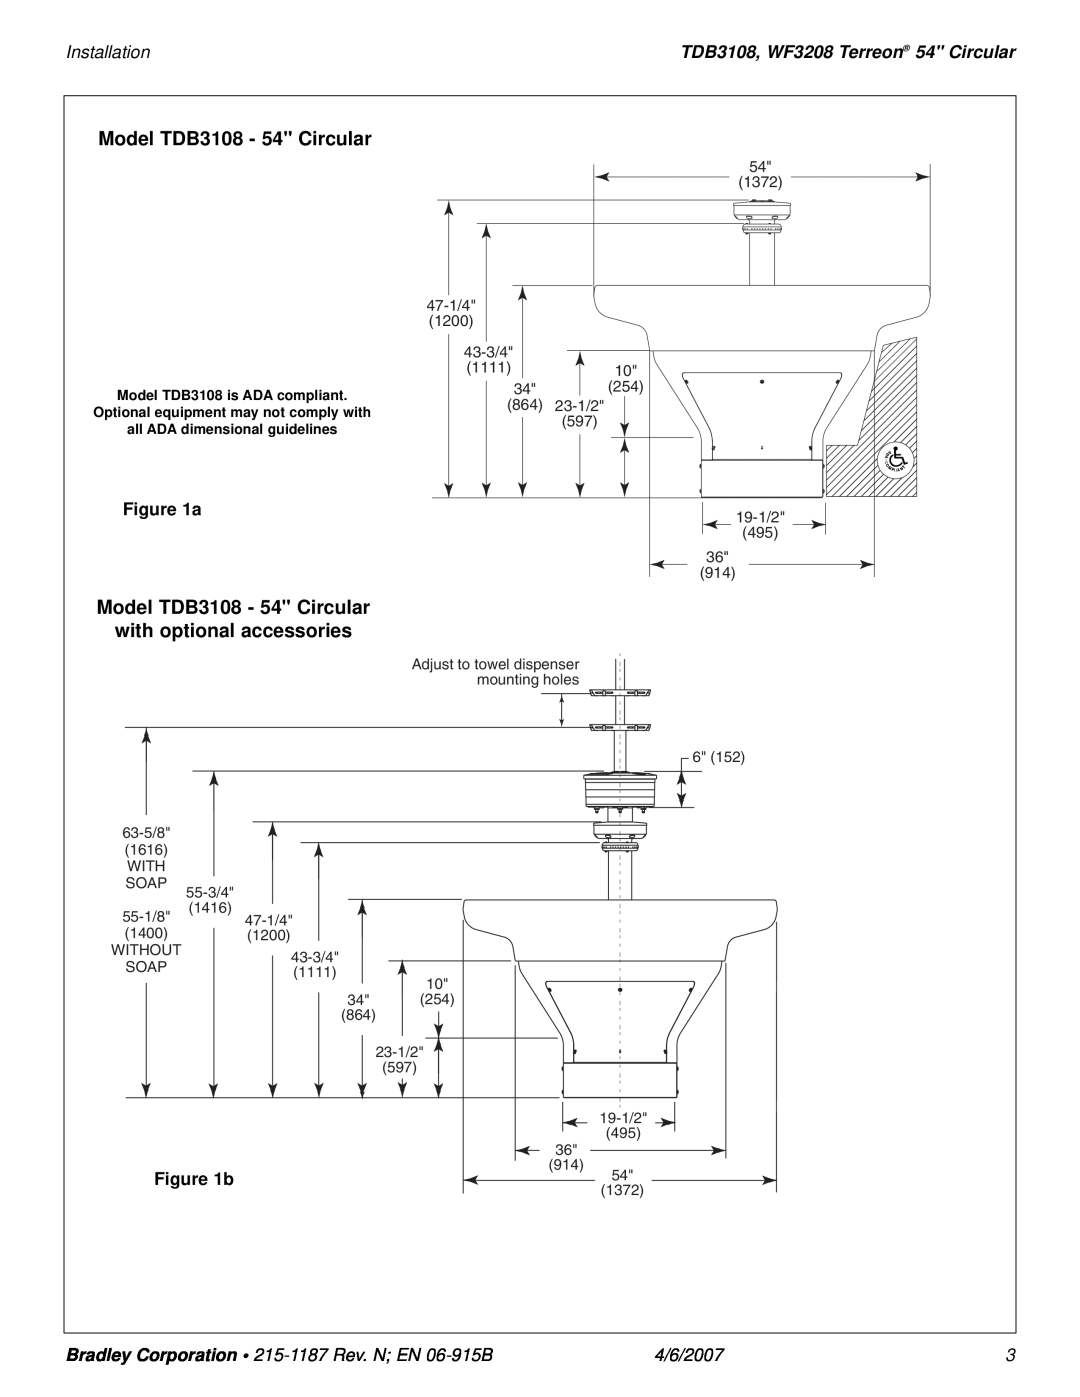 Bradley Smoker installation manual Model TDB3108 - 54 Circular with optional accessories, Installation, b, 4/6/2007 